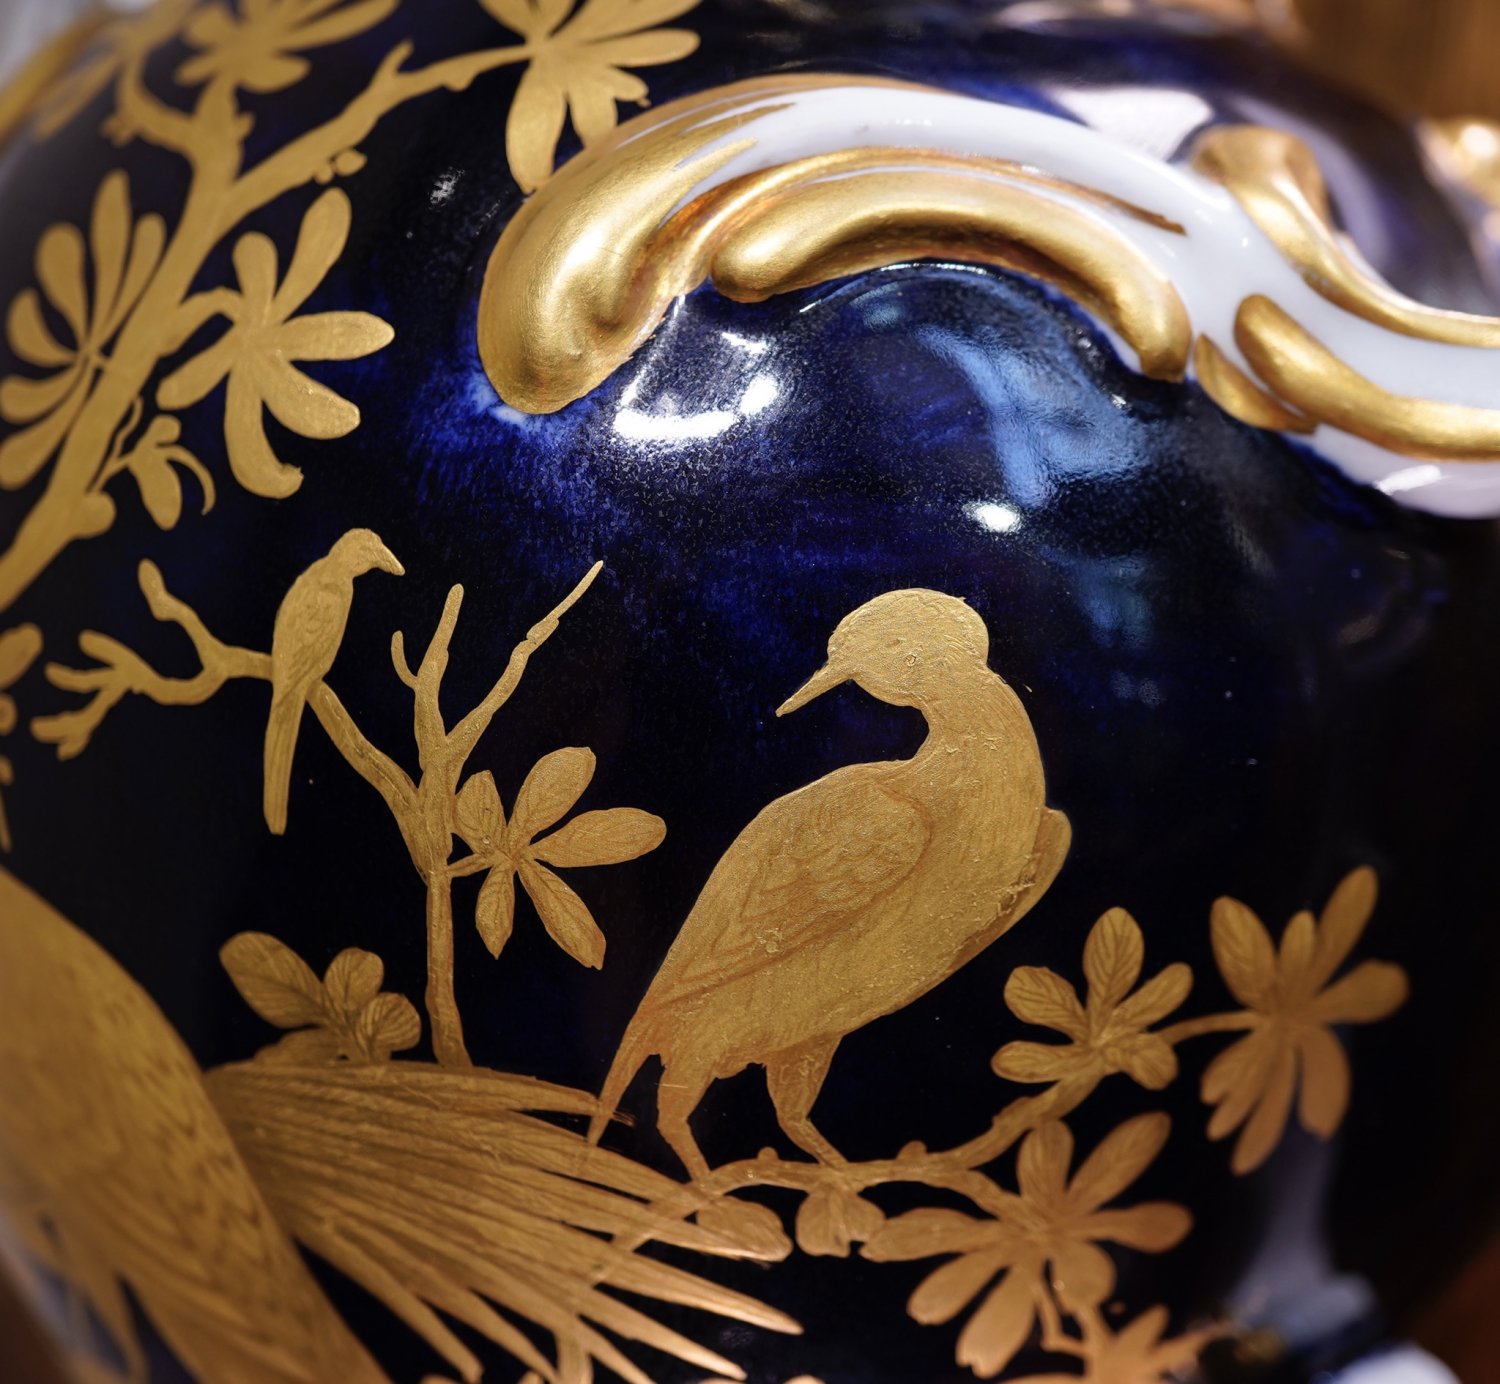 Chelsea Gold Anchor vase , ‘Dudley’ type, gilt birds & lavish Rococo form, c.1765